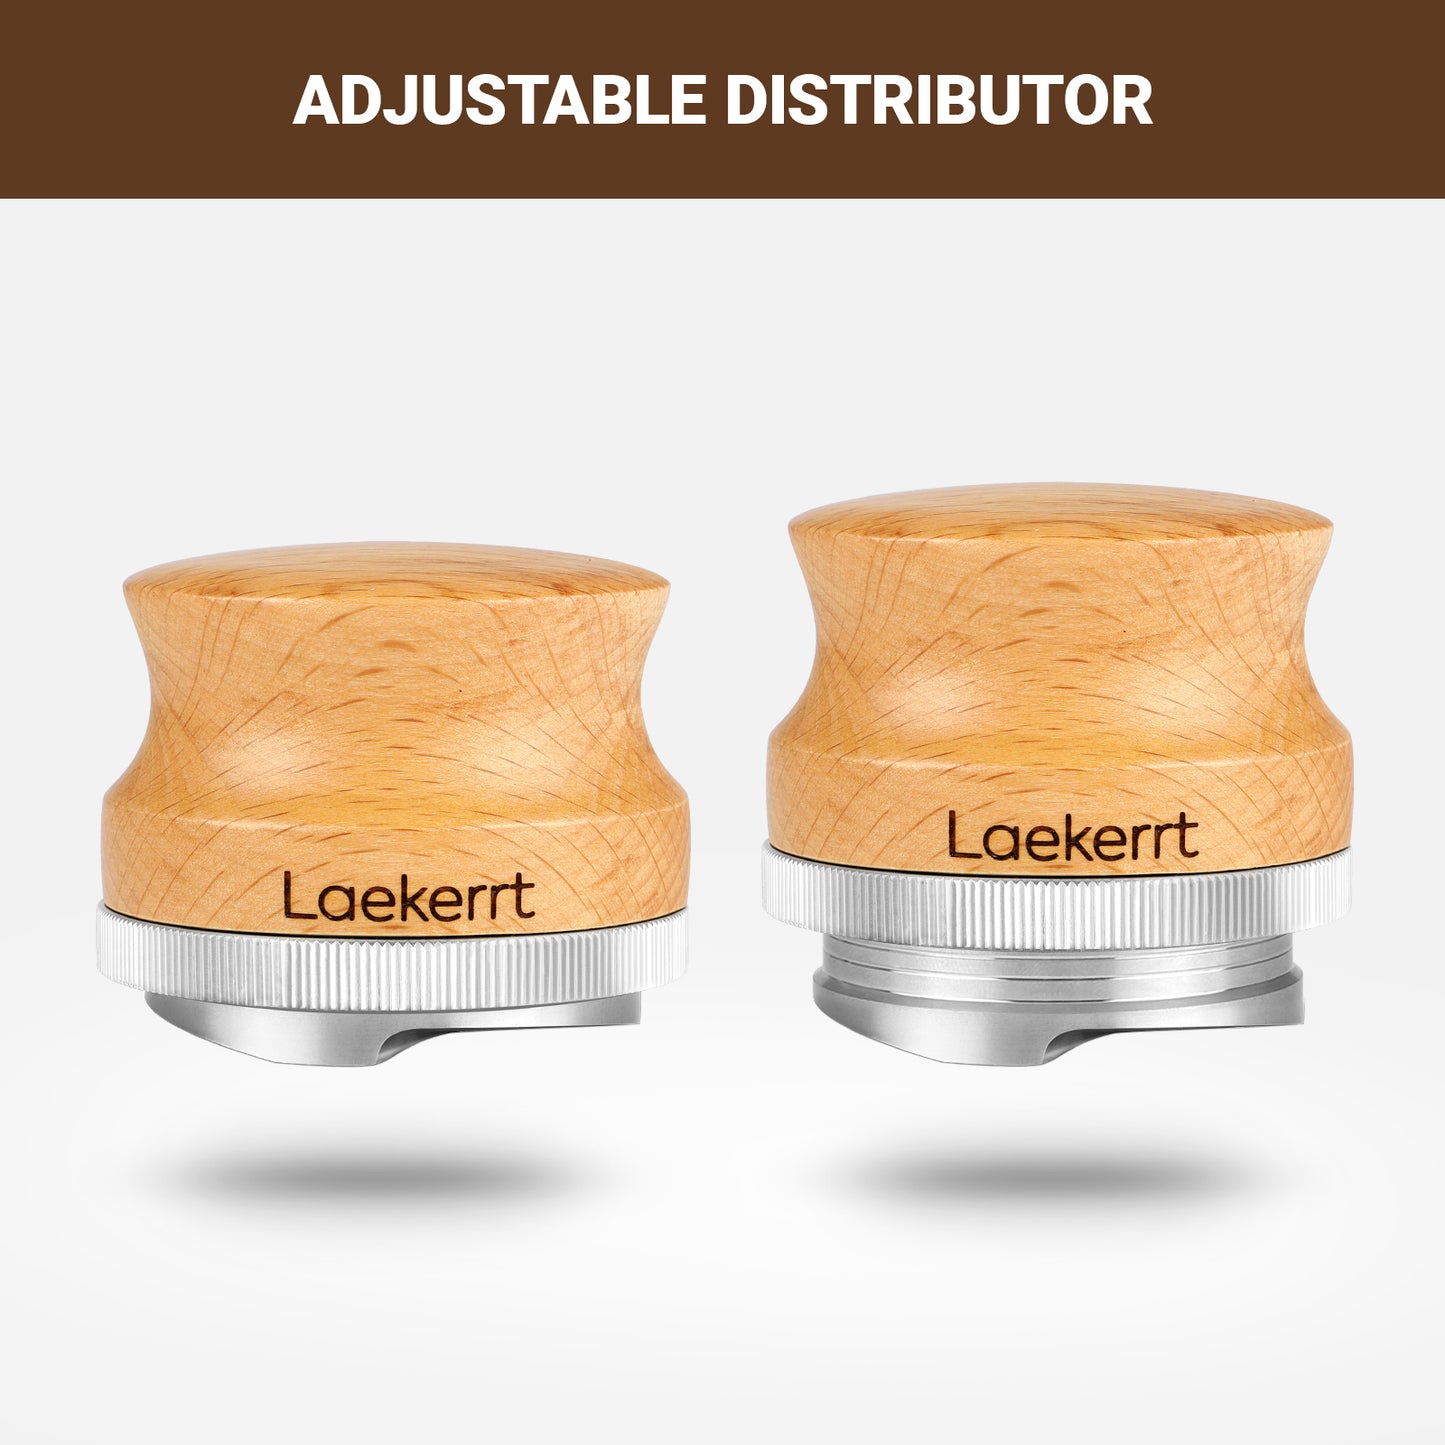 Laekerrt 51mm Espresso Distributor, Stainless Steel Base Coffee Leveler with Wood Handle, Adjustable Height Espresso Distribution Tool